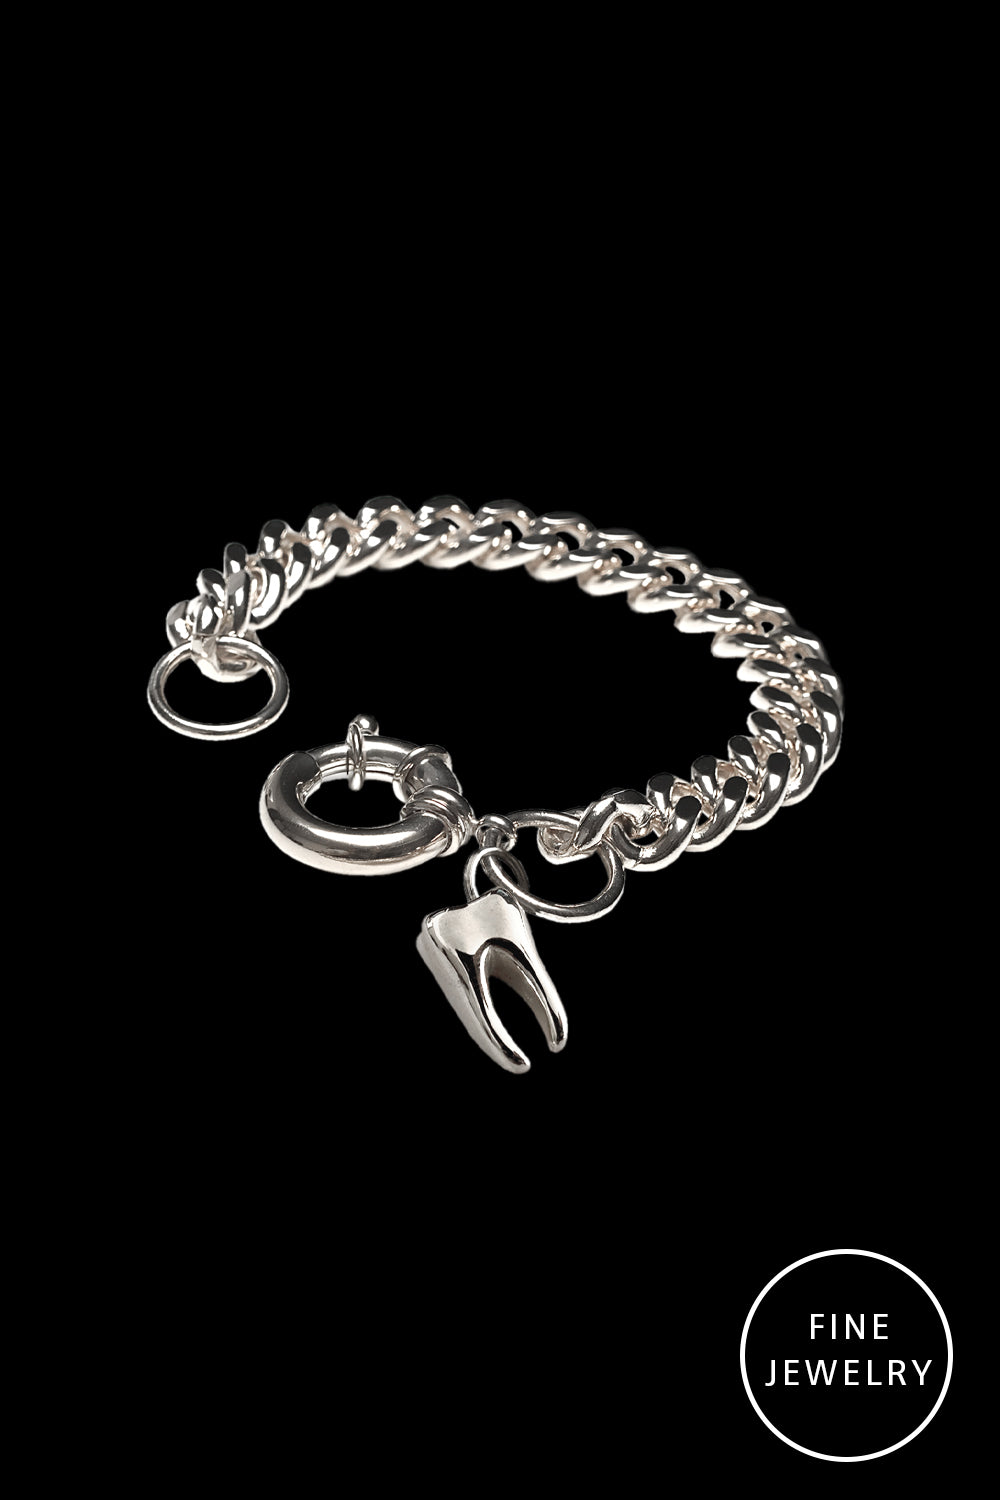 FINE JEWELRY - TOOTH - Silver Bracelet